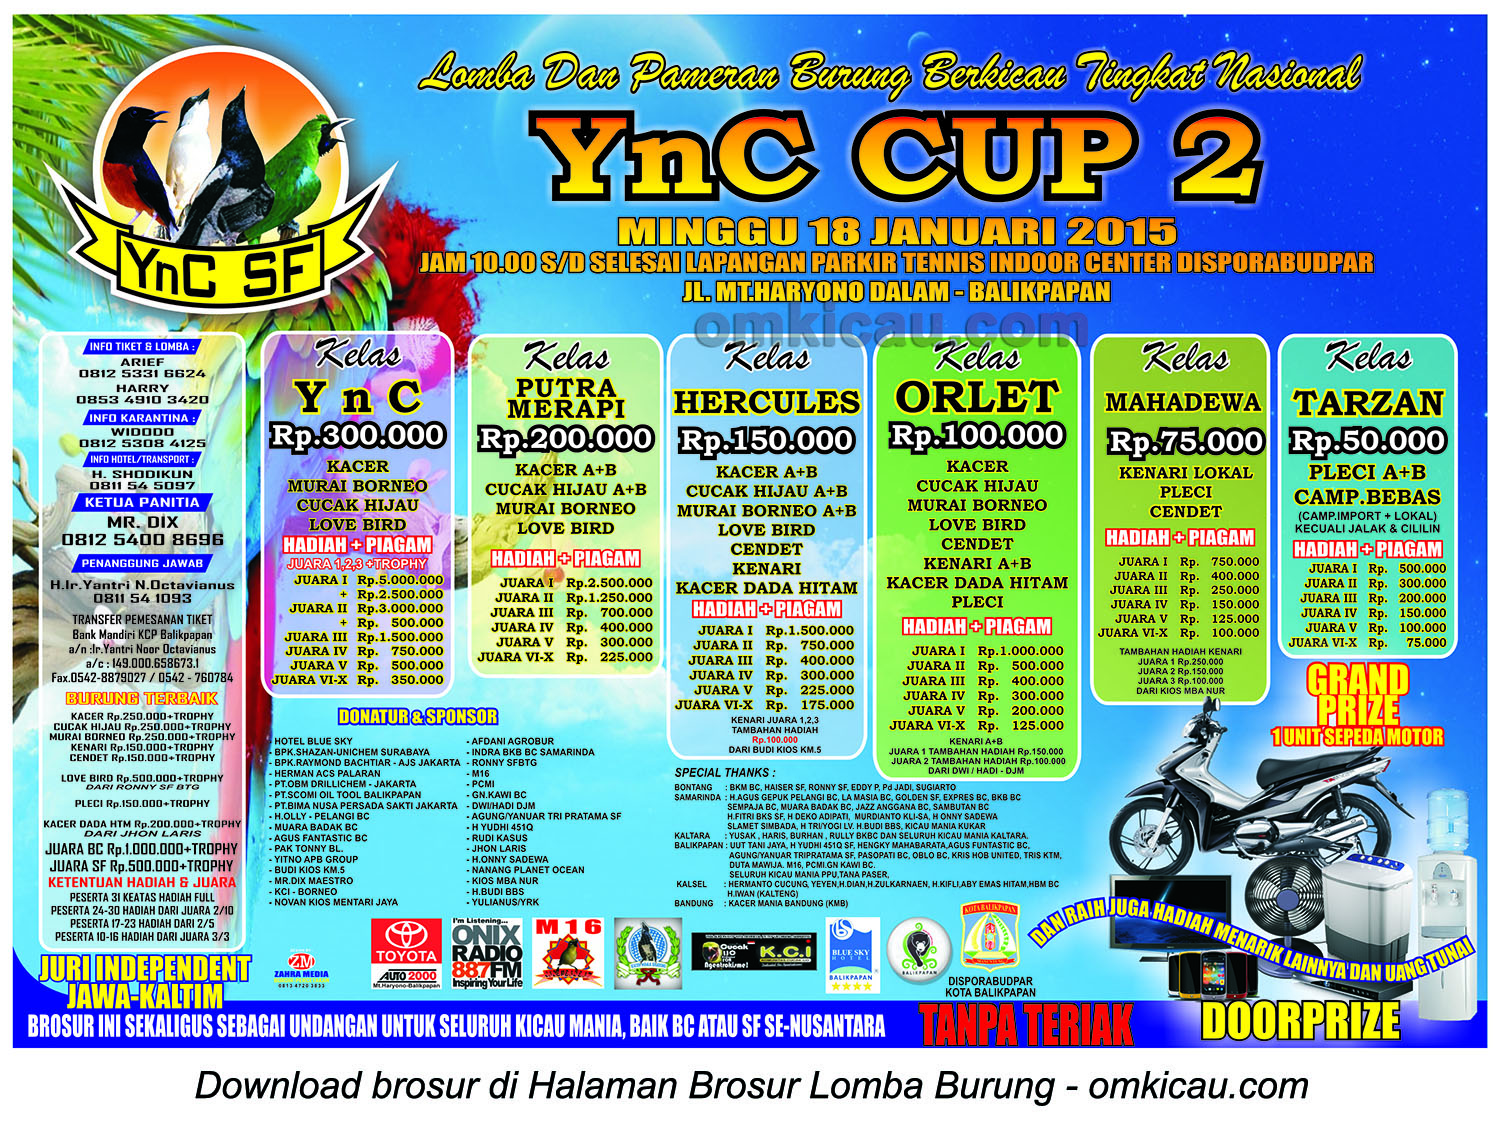 Brosur Lomba Burung Berkicau YnC Cup 2, Balikpapan, 18 Januari 2015